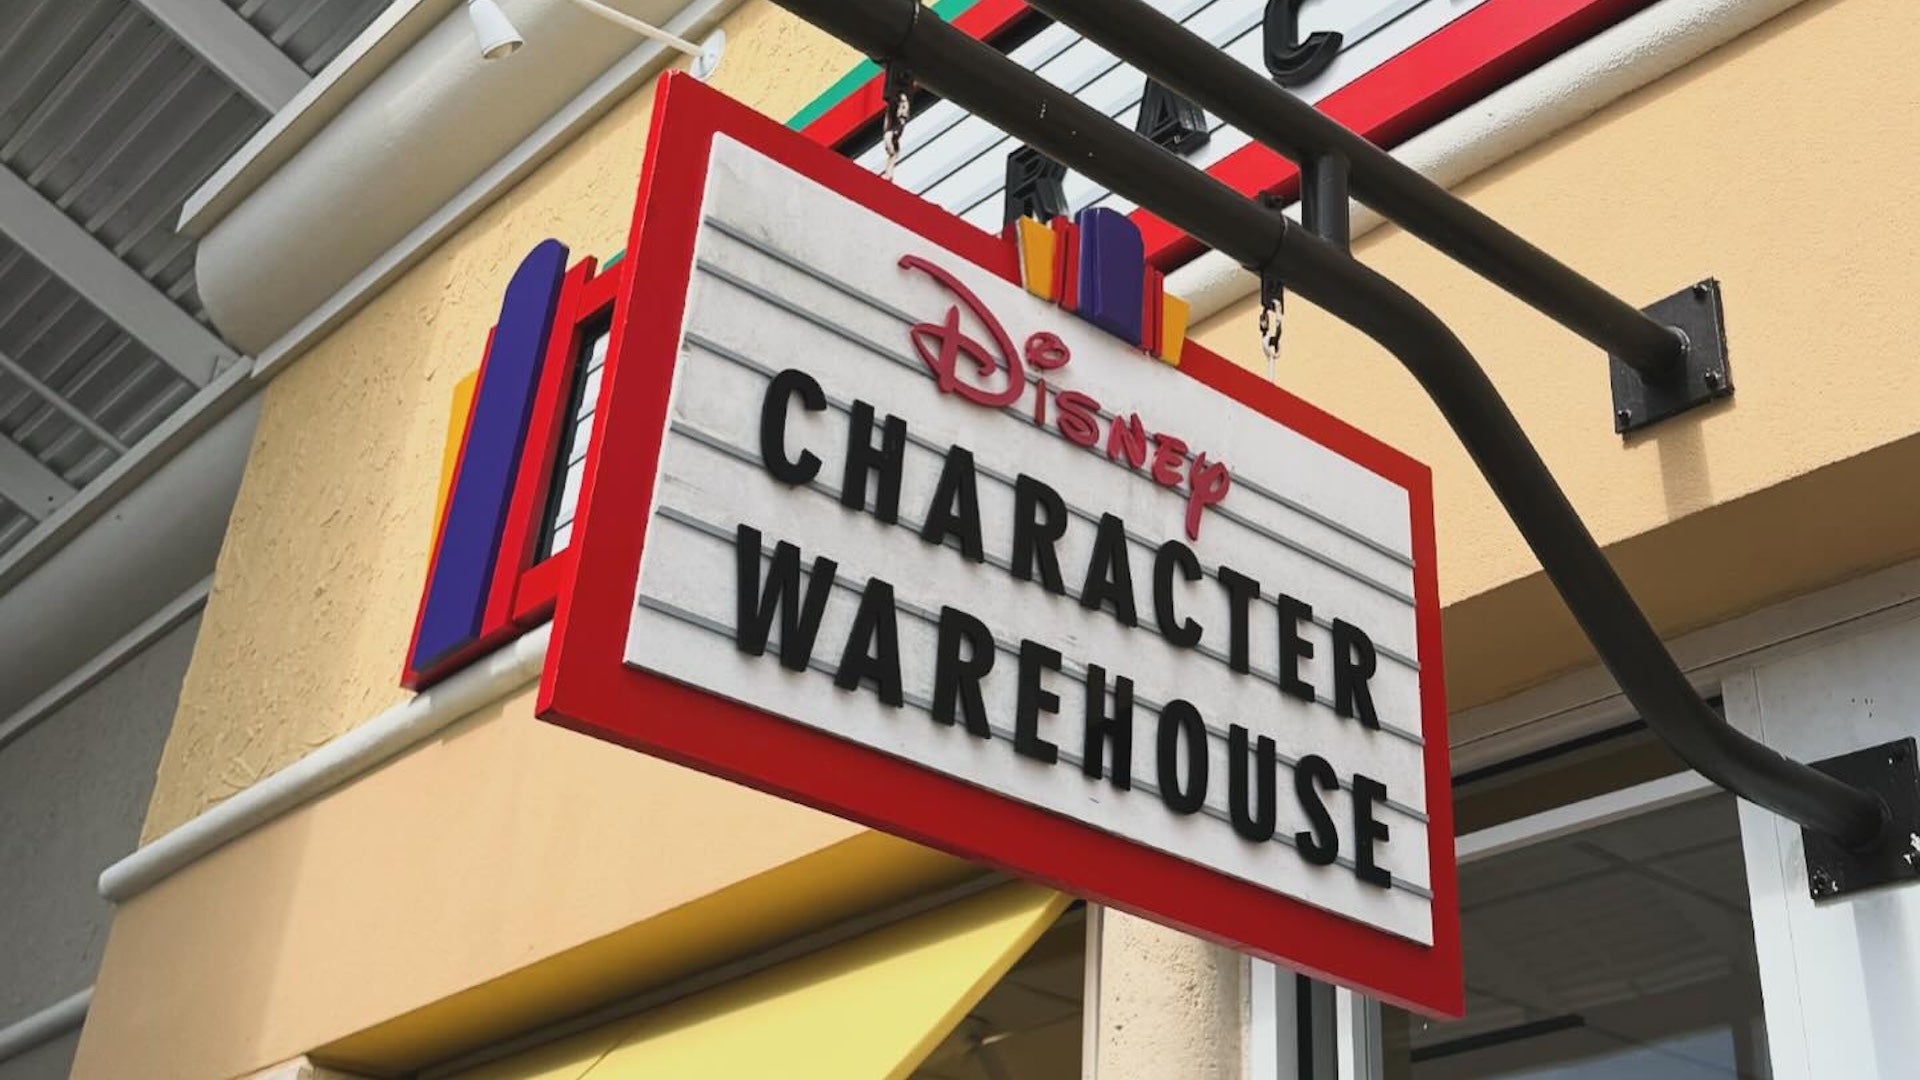 disney character warehouse sign